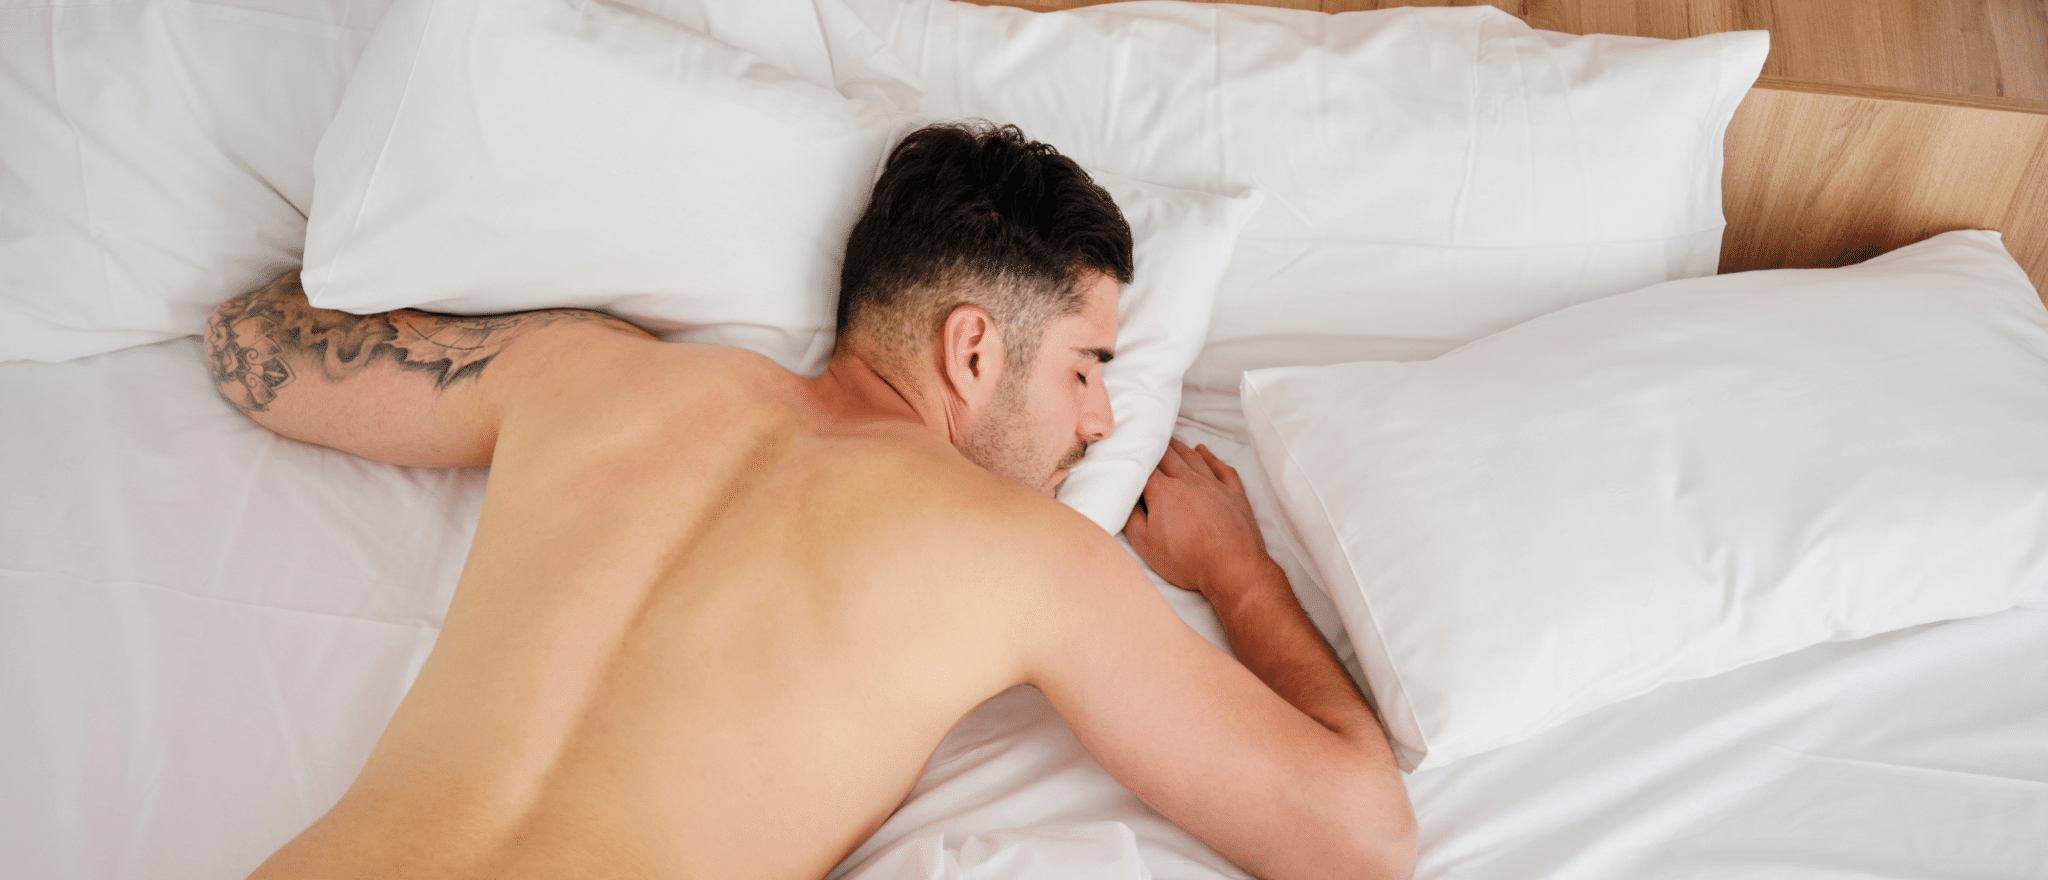 Sleeping Naked Increases Testosterone: Myth or Fact?